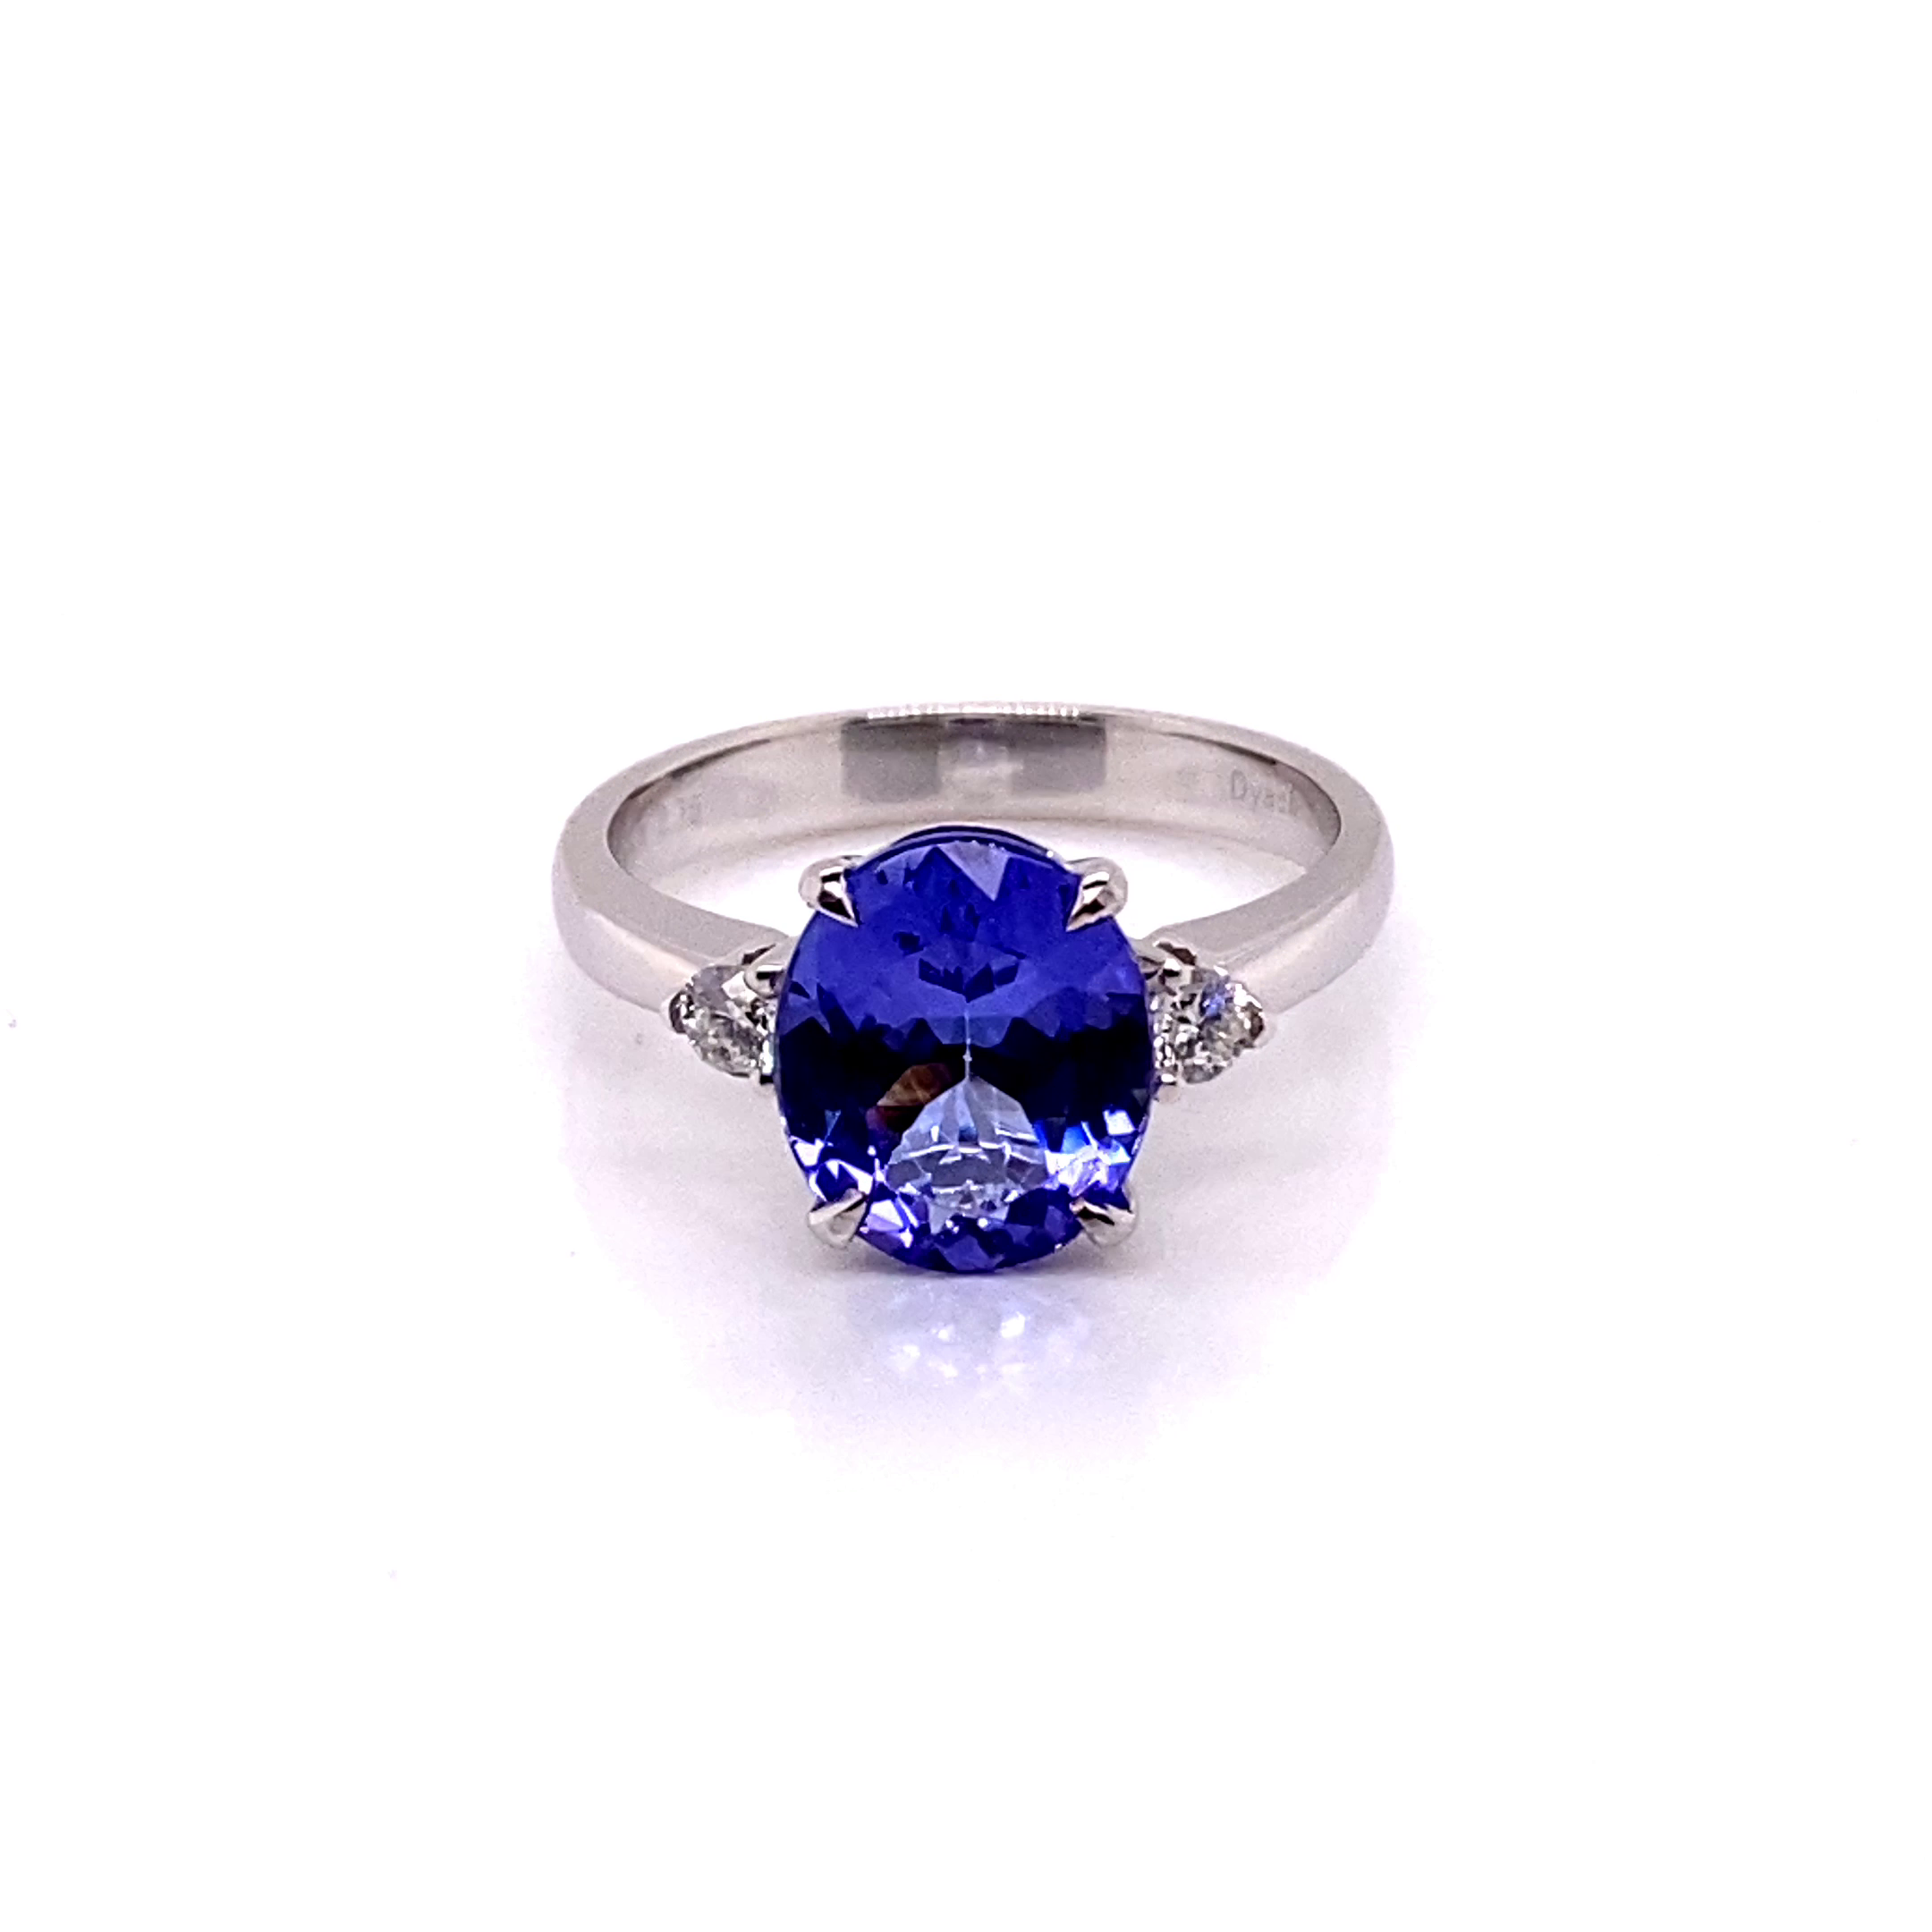 14KW Oval Cut Purple/Blue Tanzanite And Diamond Fashion Ring